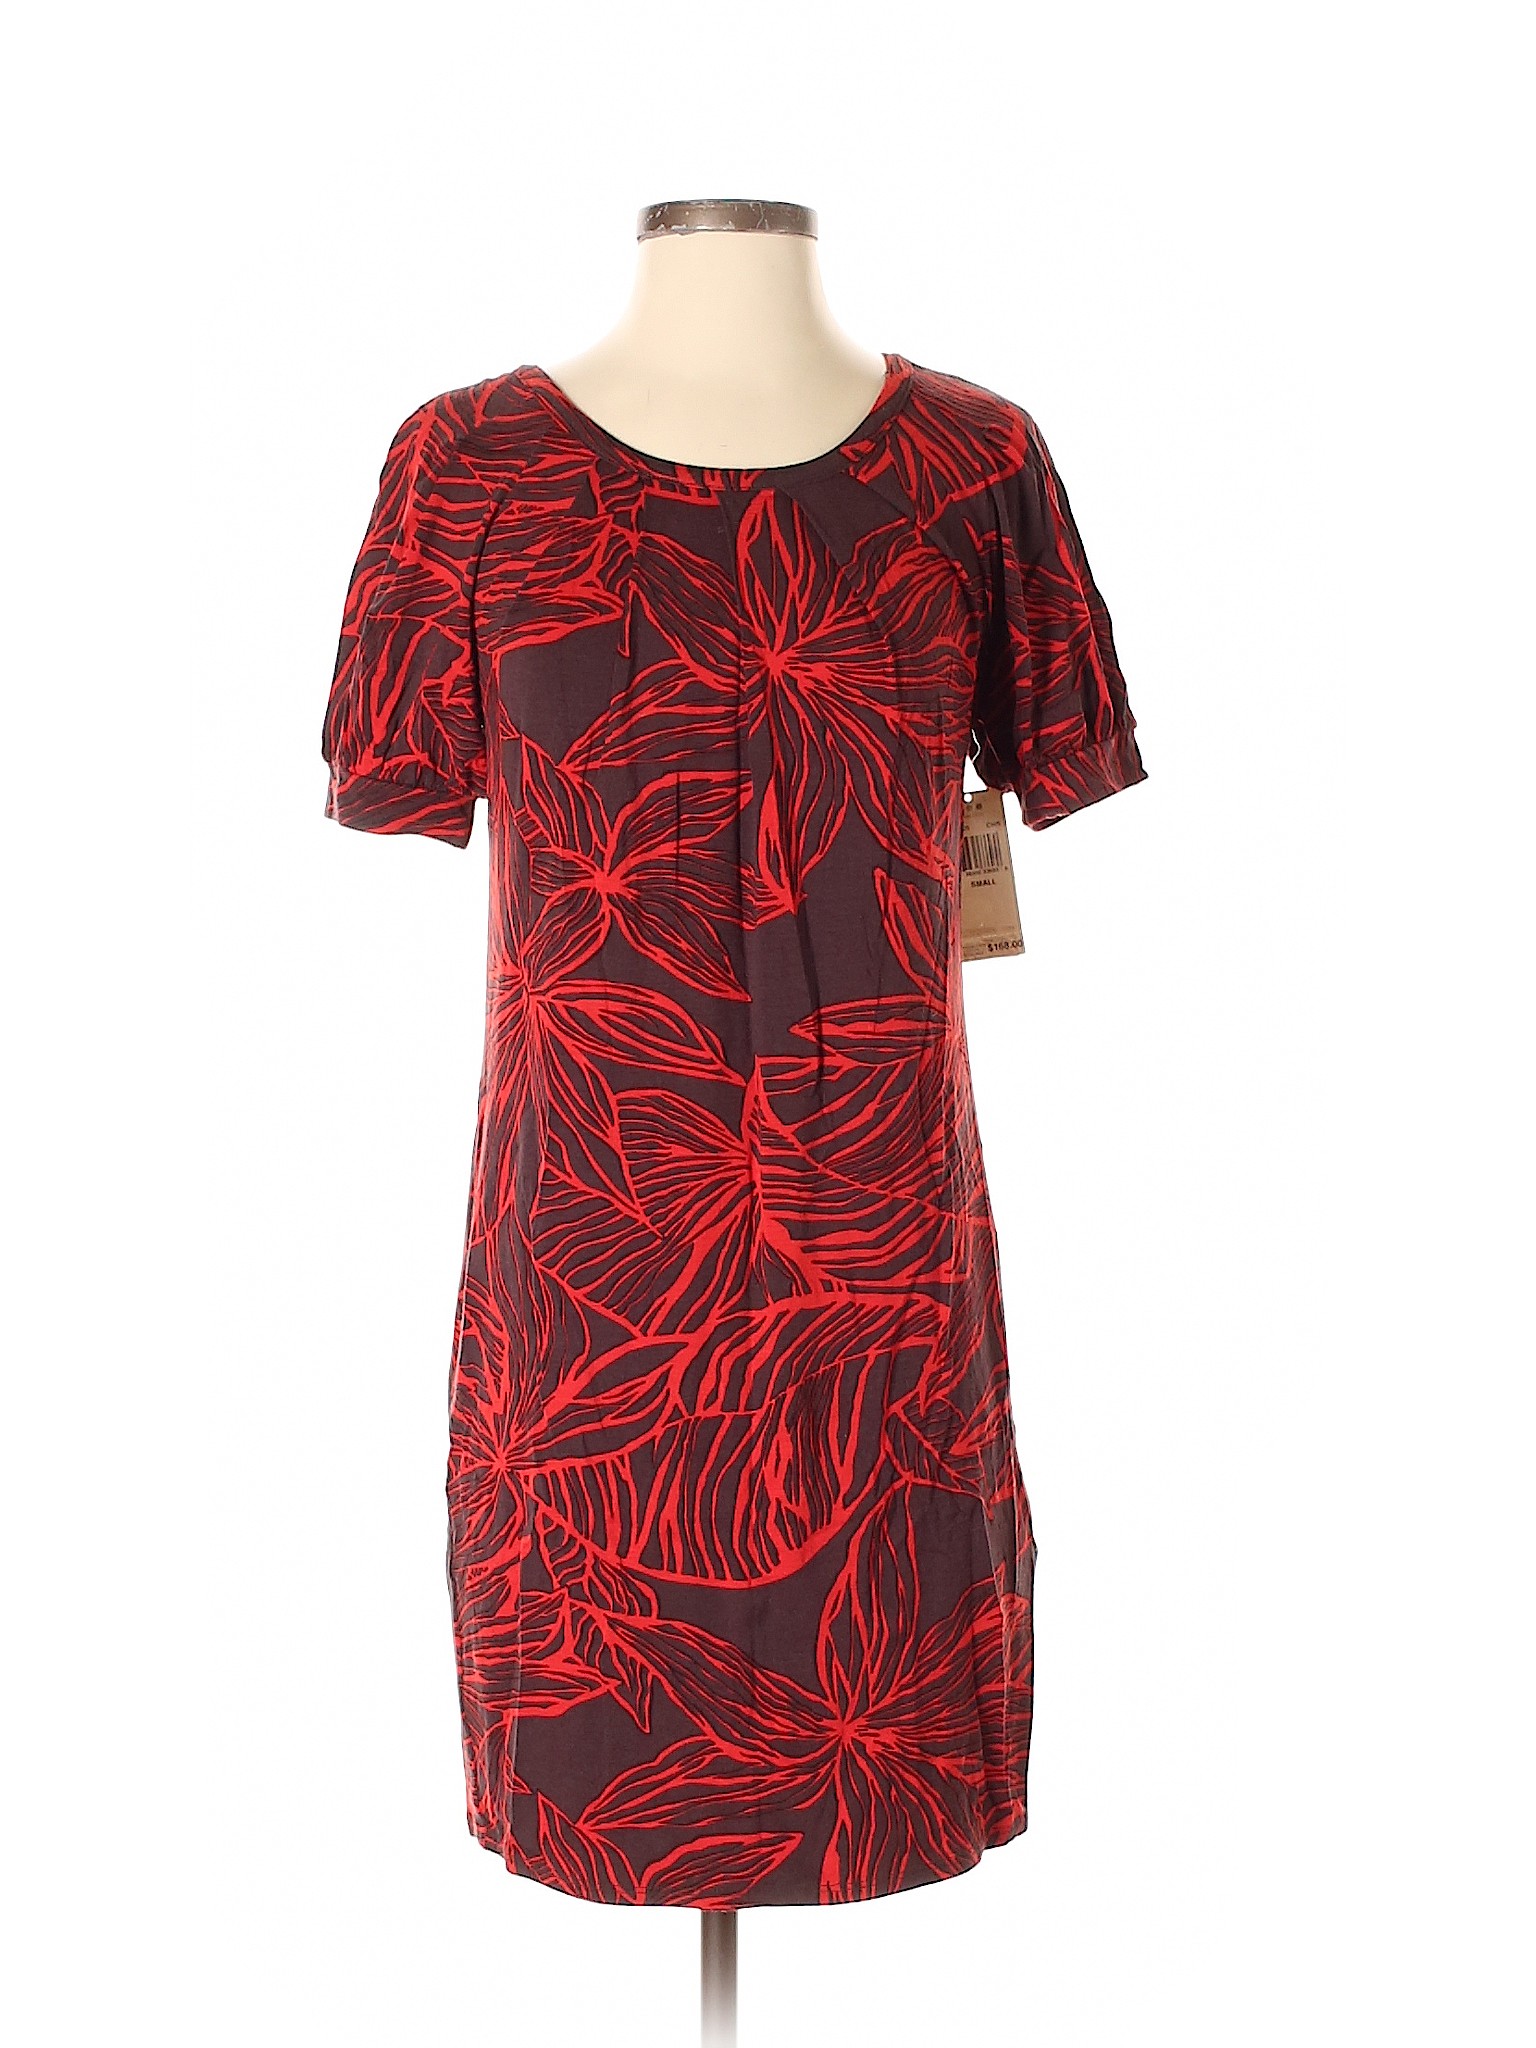 NWT Three Dots Women Red Casual Dress Sm | eBay